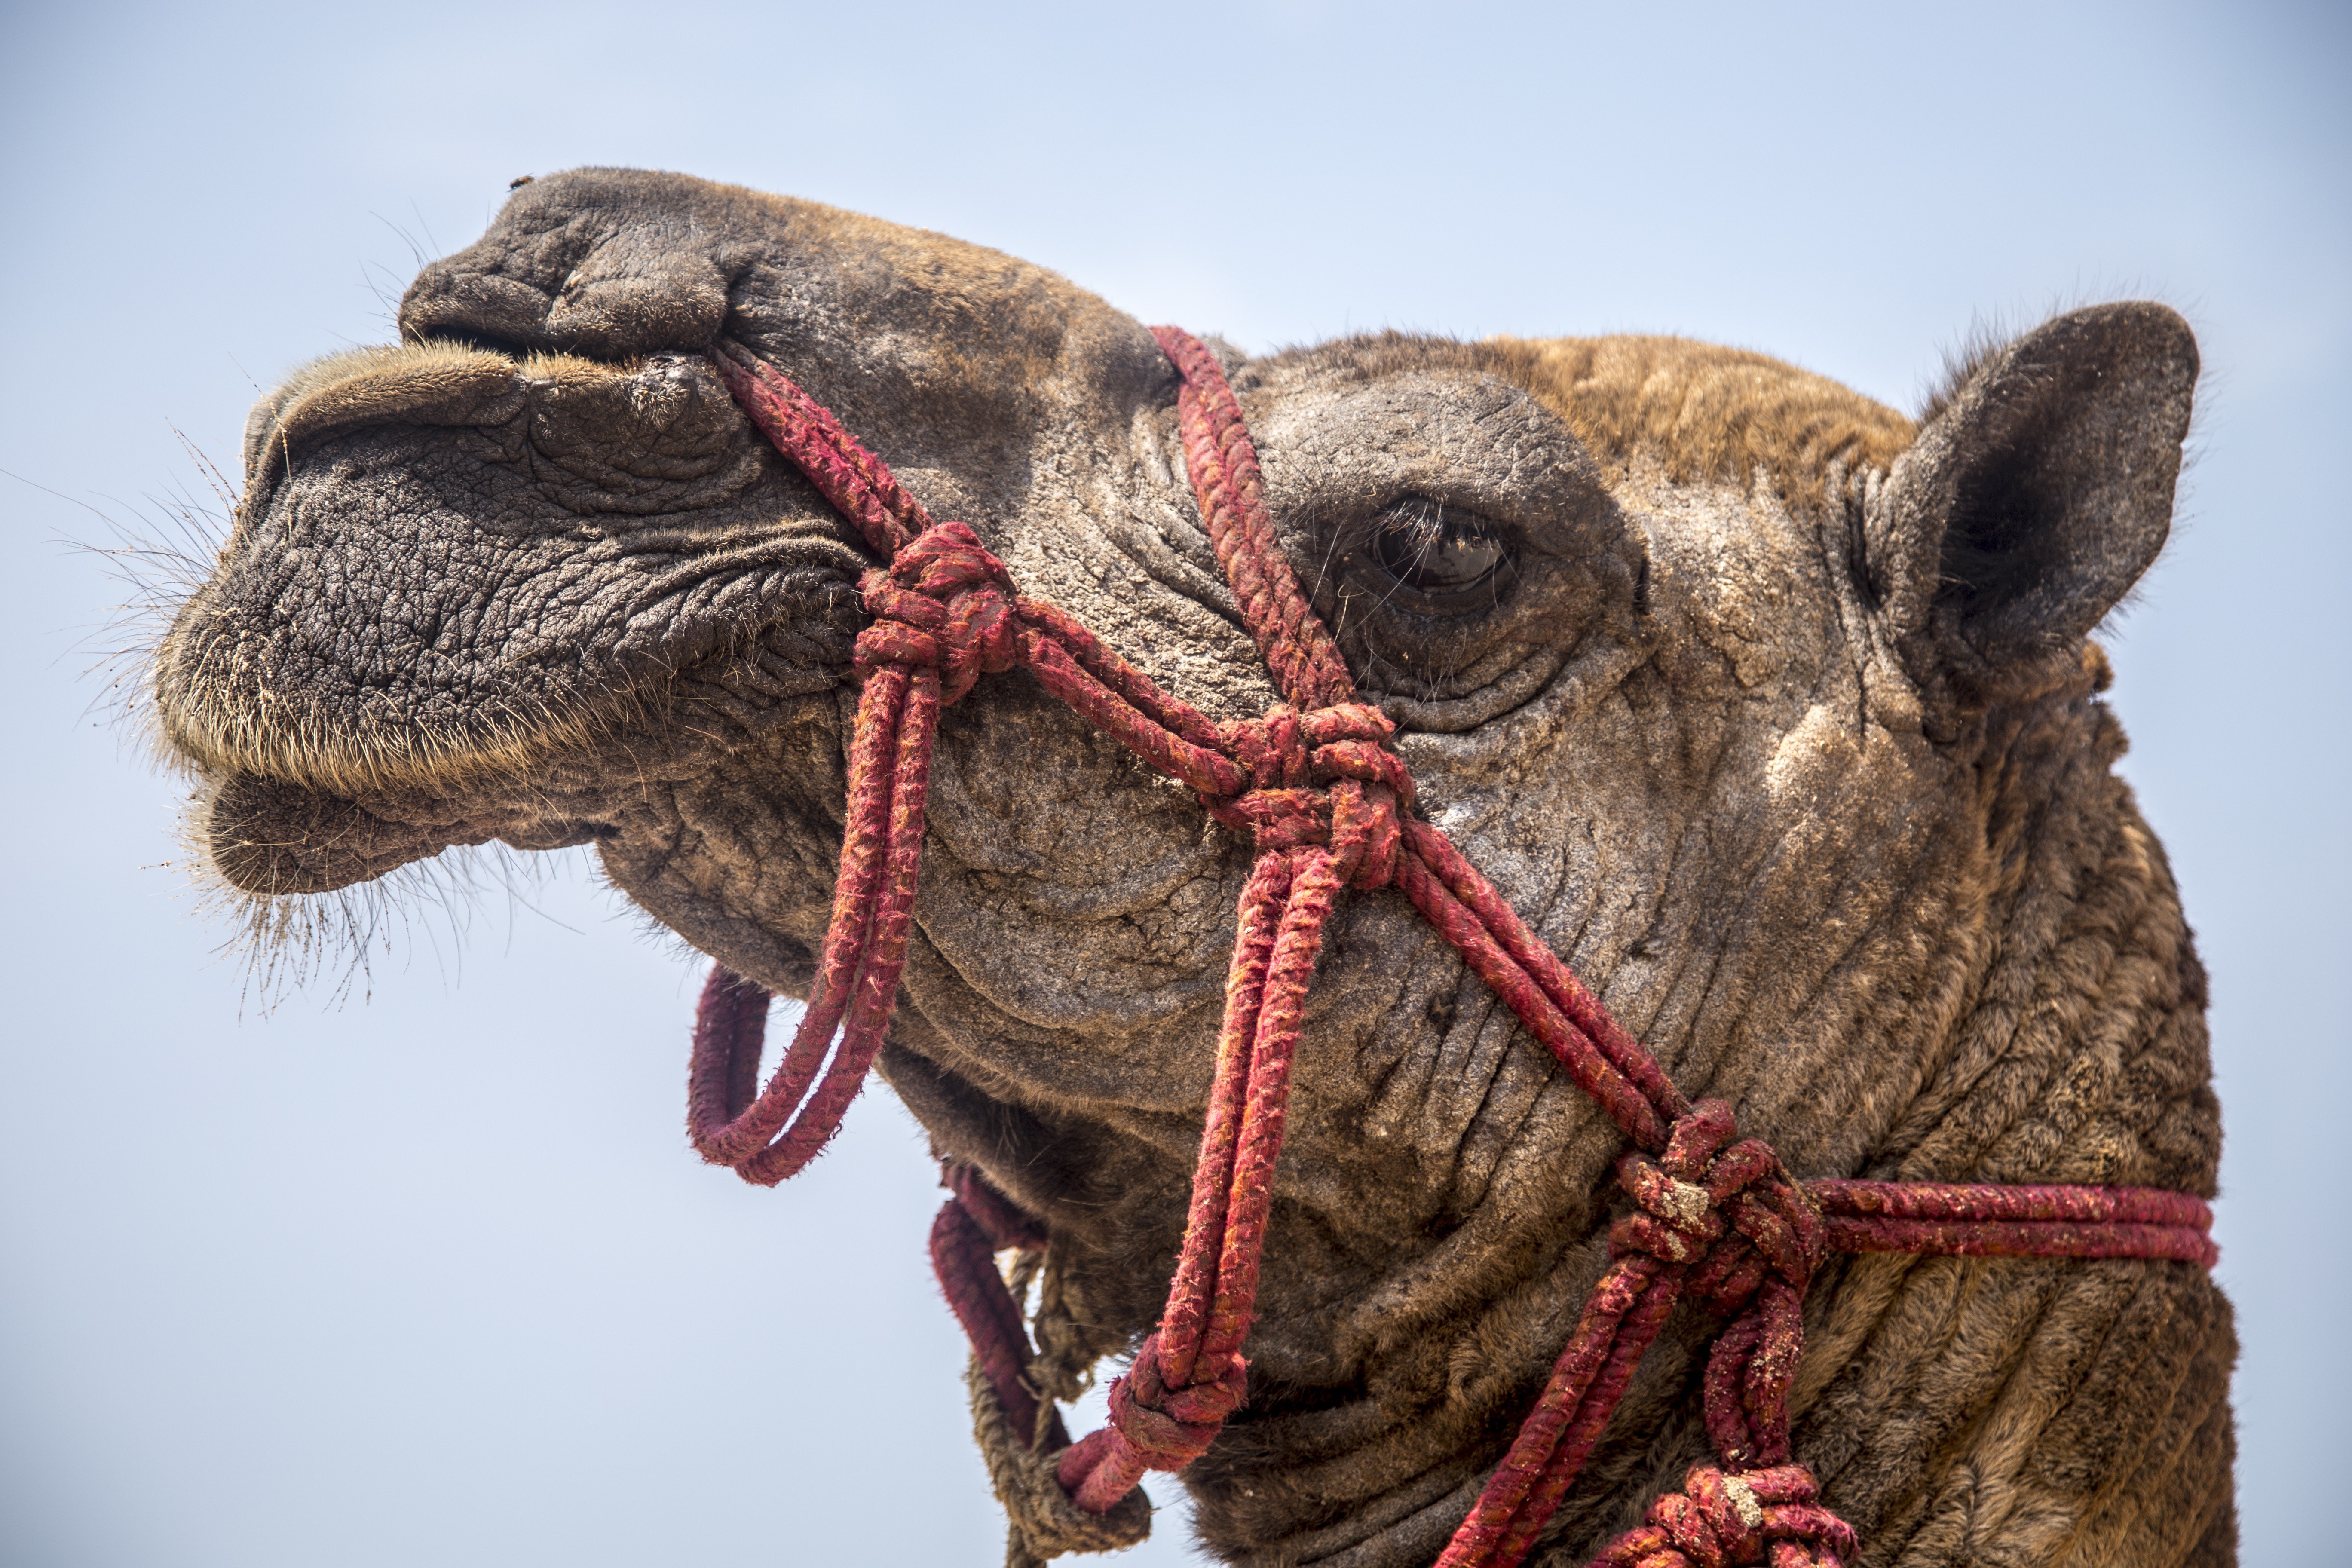 Camel, Animal, Tourism, Travel, Sea, rope, animal body part